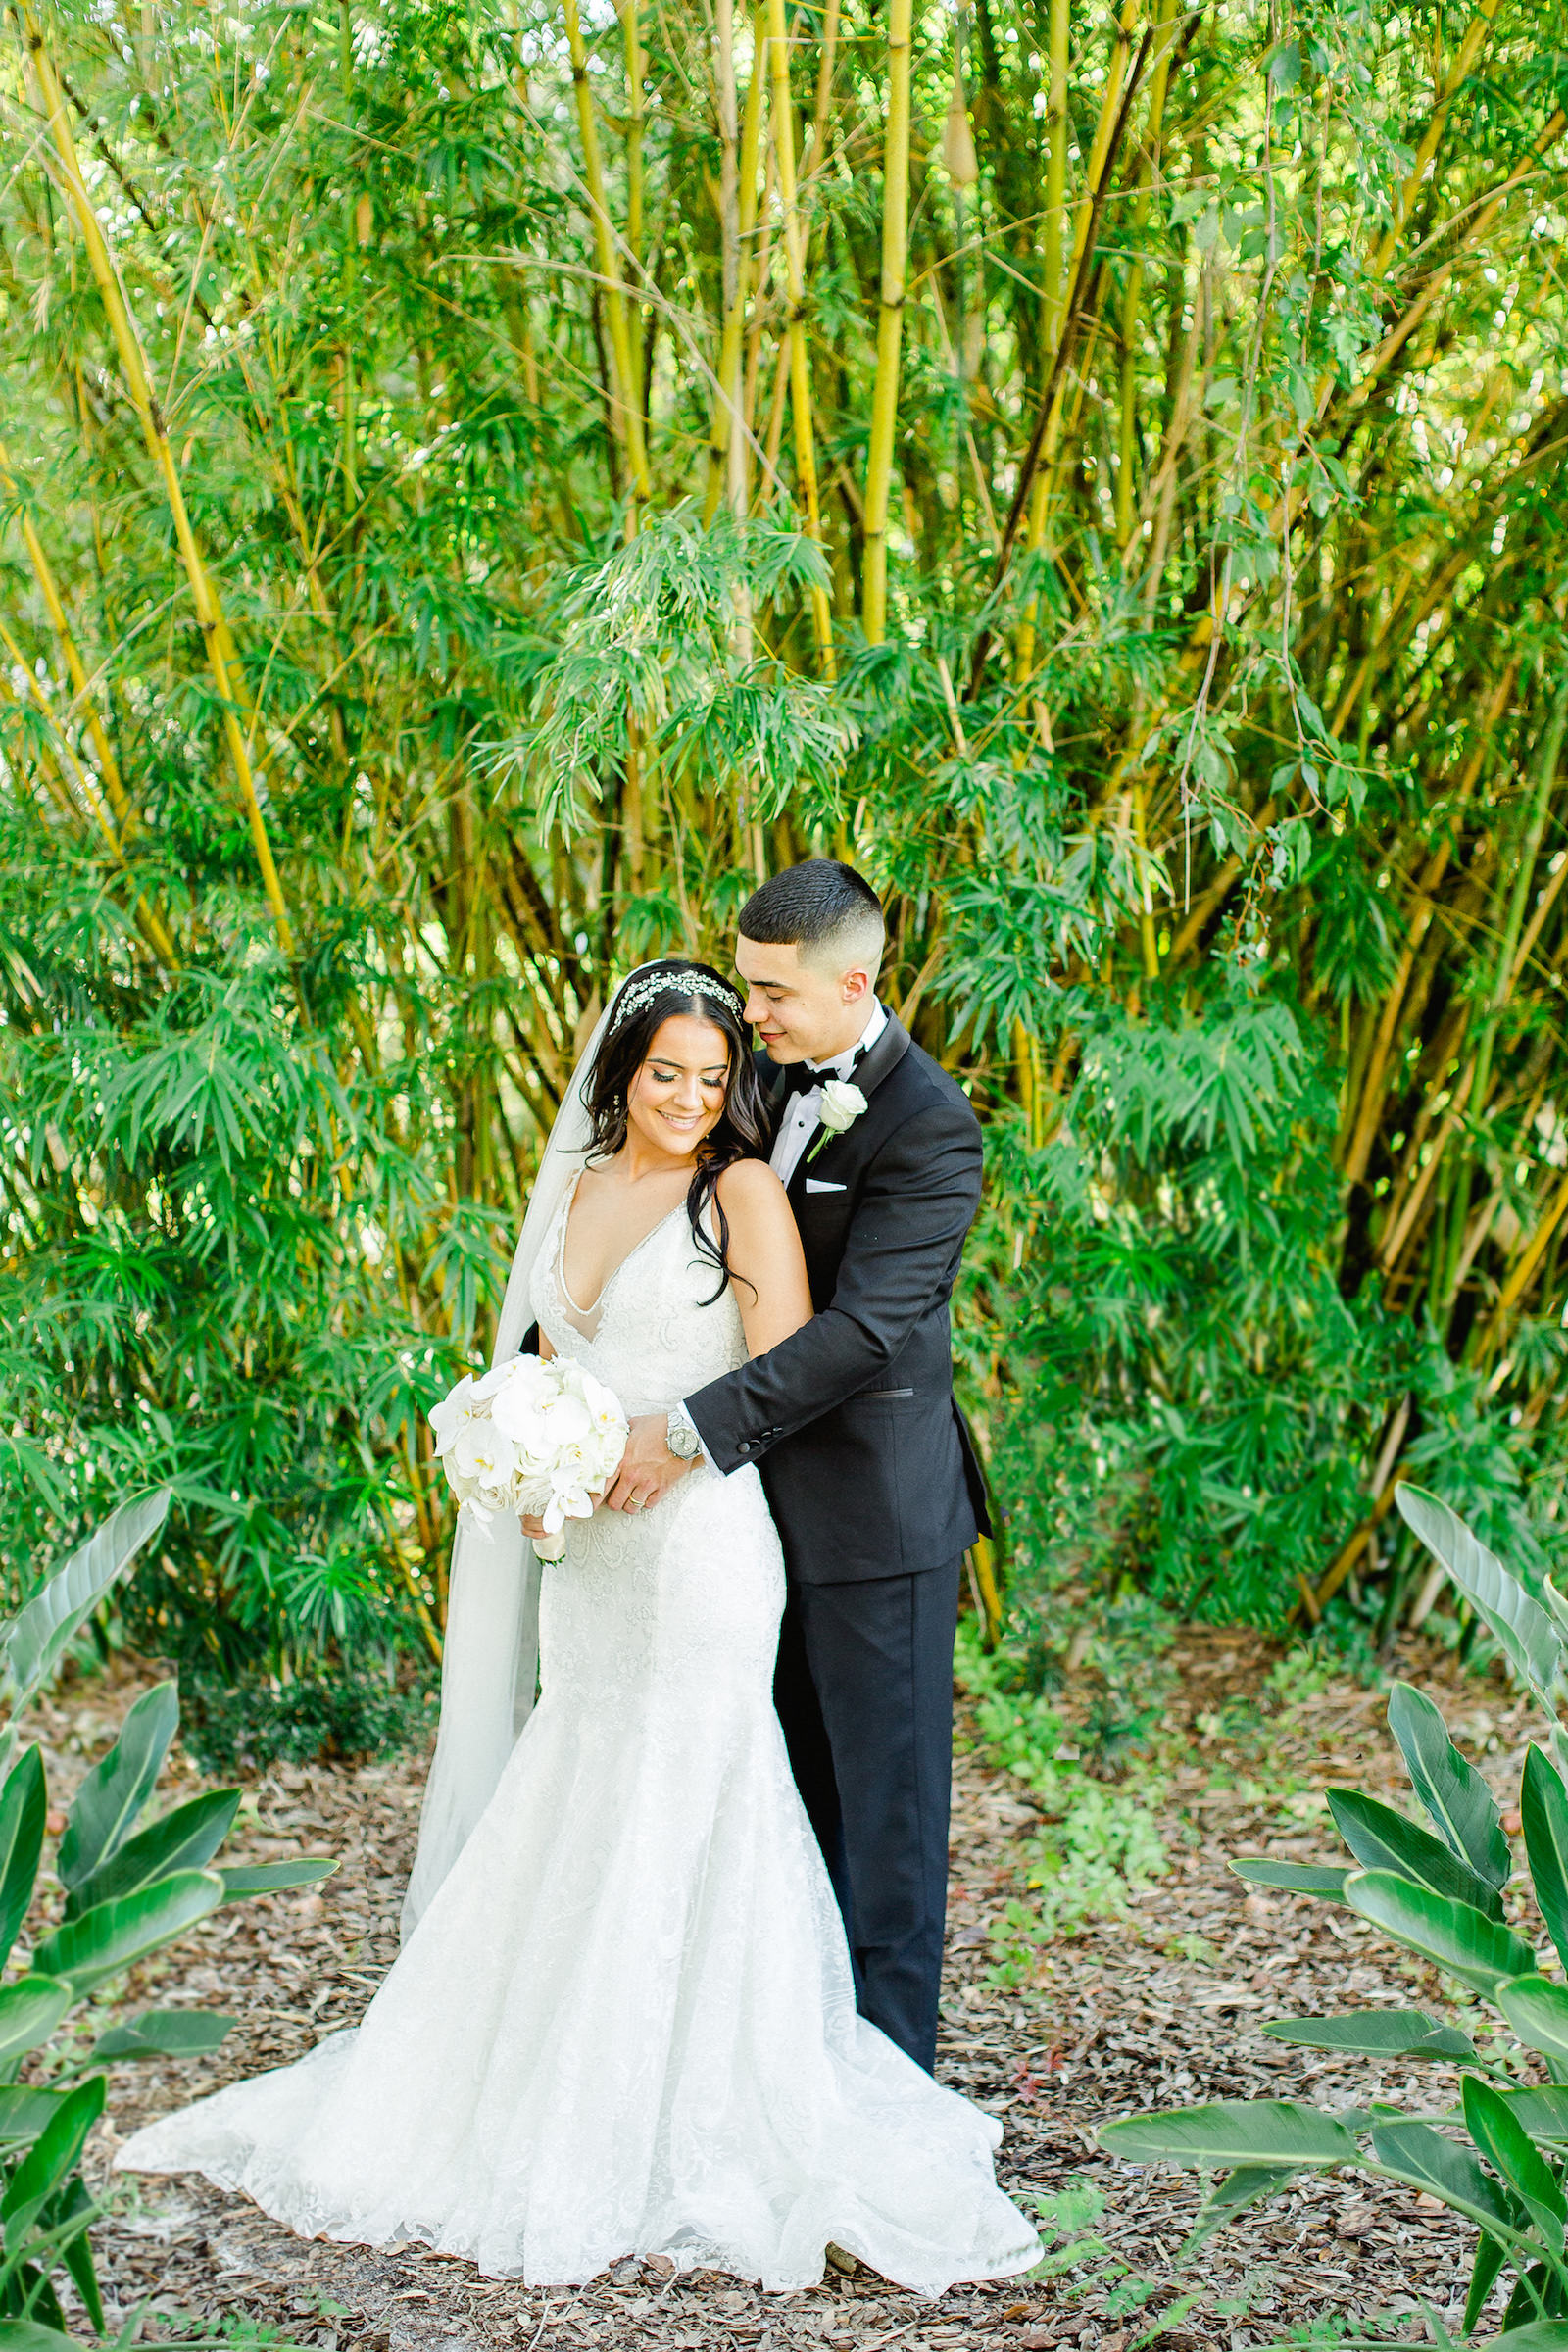 Romantic Bride and Groom Wedding Portrait in Bamboo Garden | Tampa Bay Wedding Hair and Makeup Femme Akoi Beauty Studio